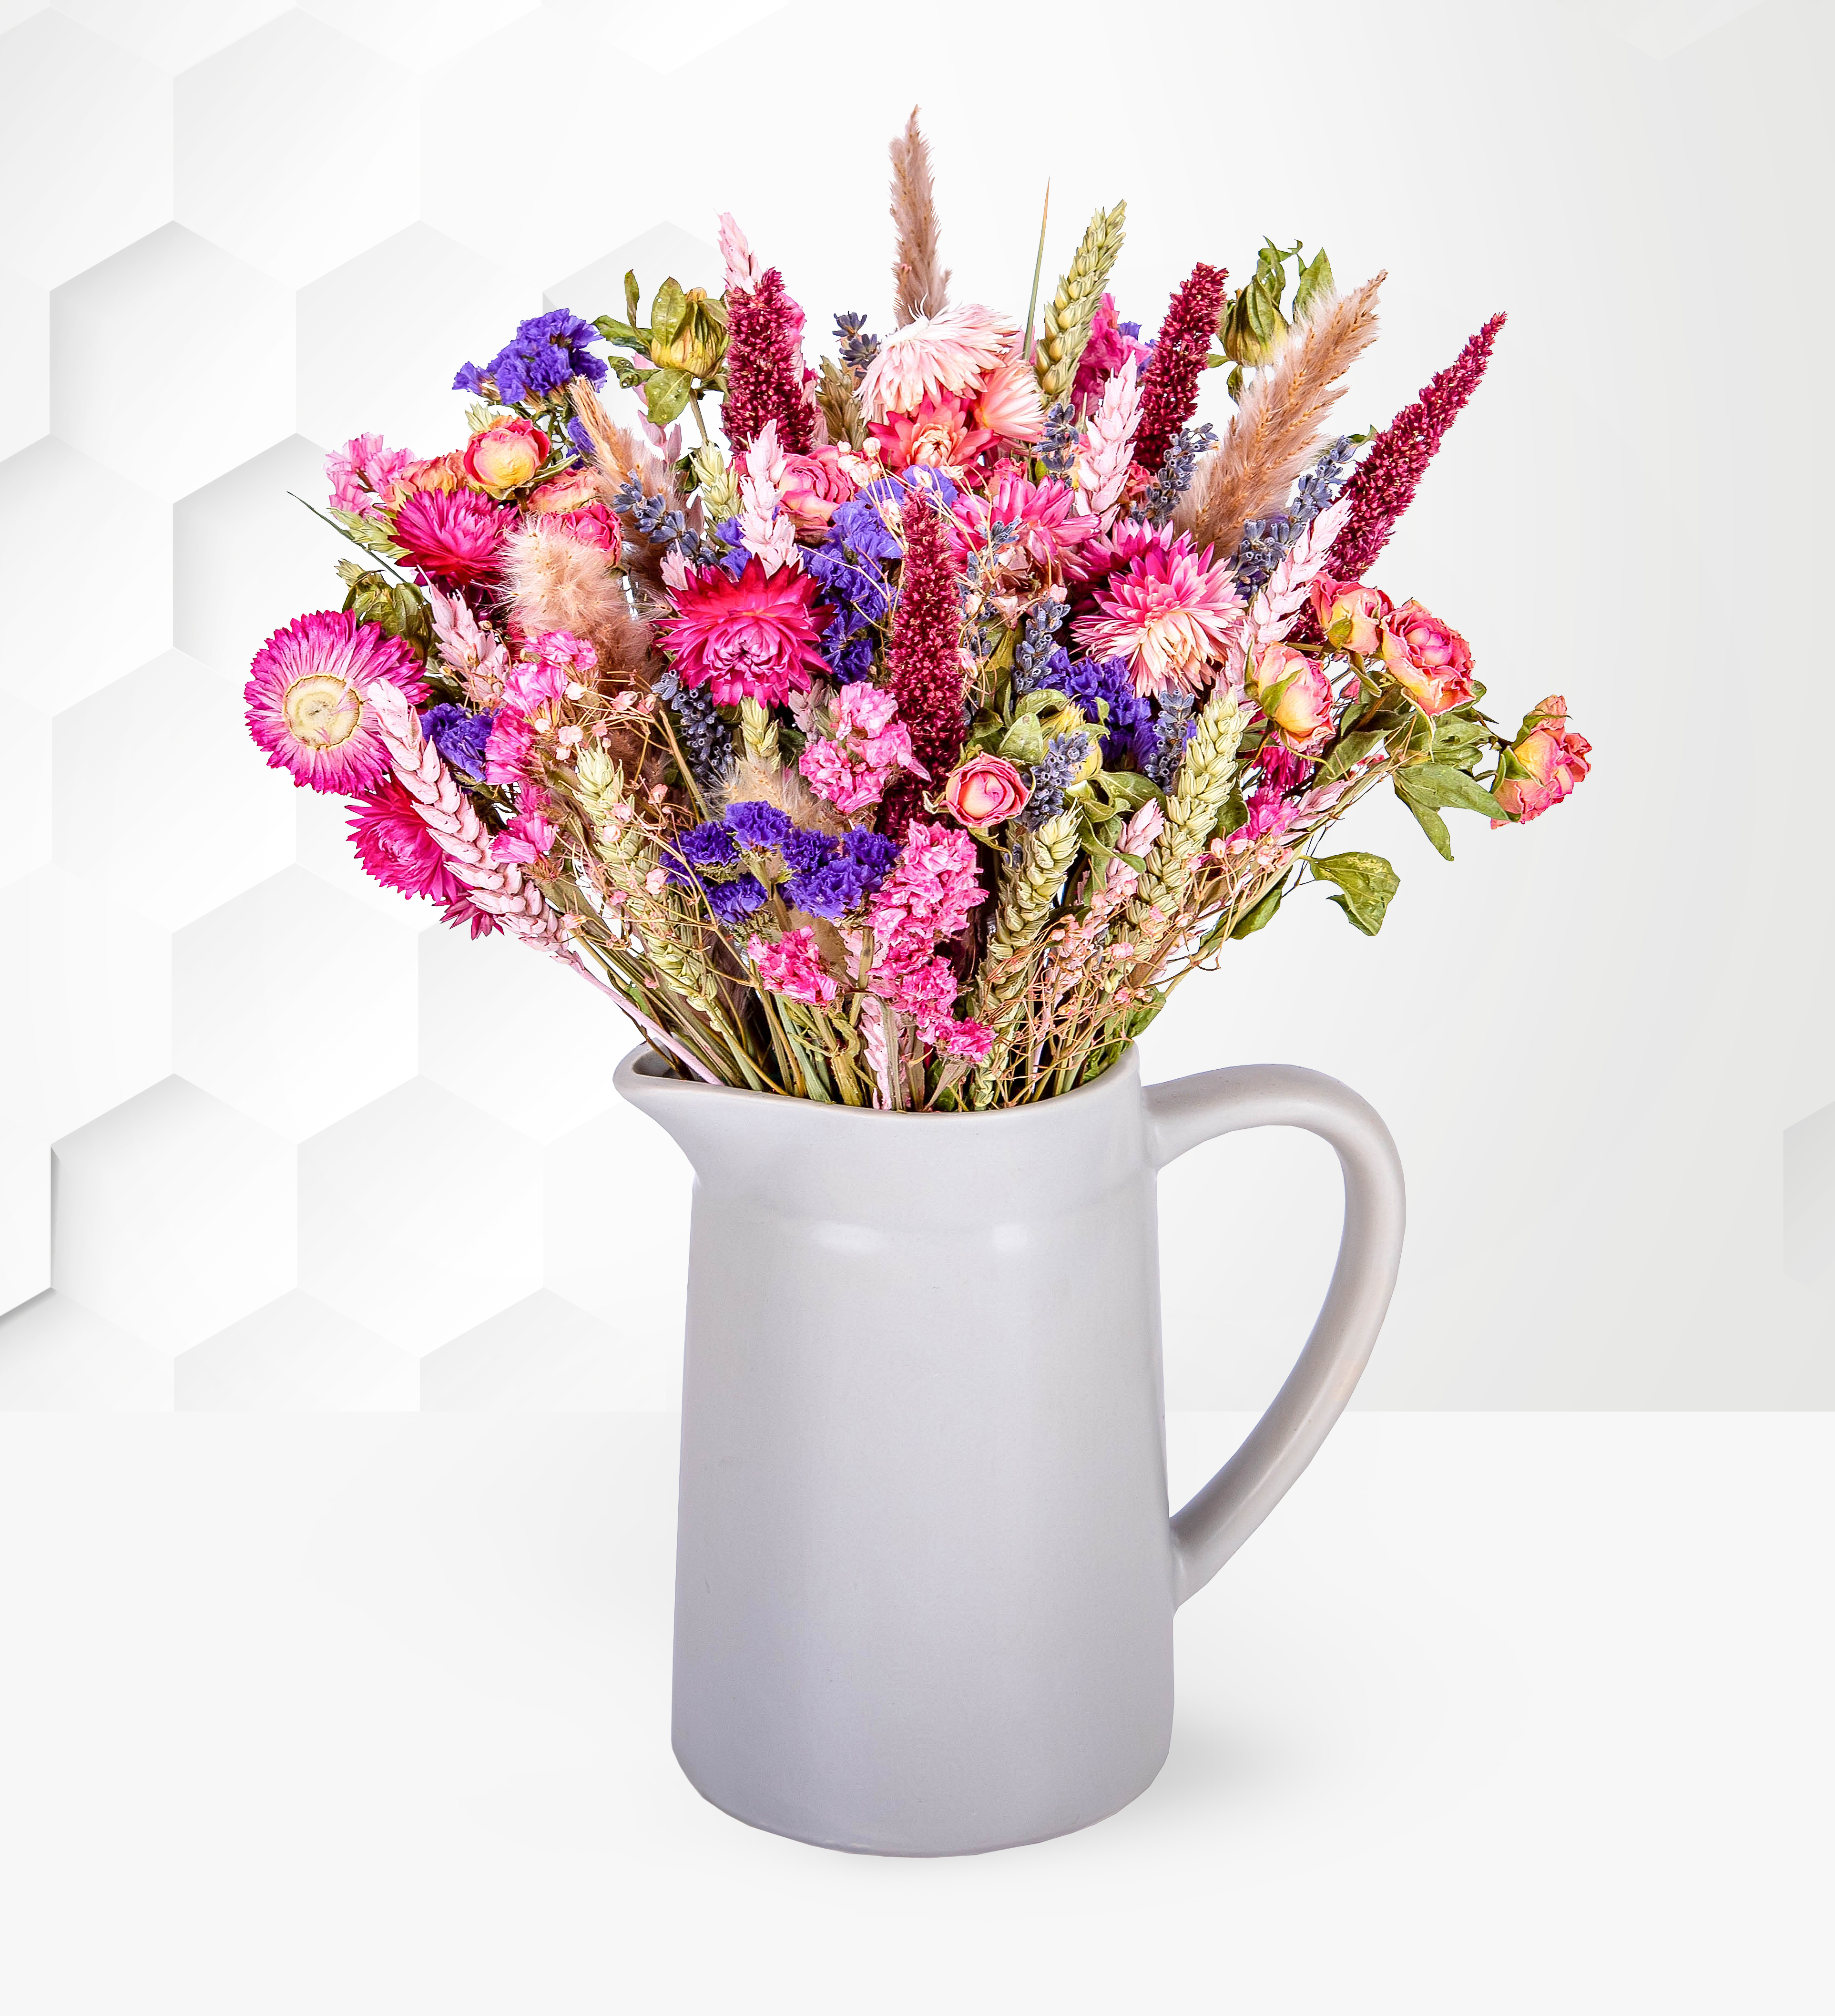 PrettyandPink Dried Flowers - Dried Flowers - Dried Flower Bouquet - Dried Bouquet - Faux Flowers - Artificial Flowers